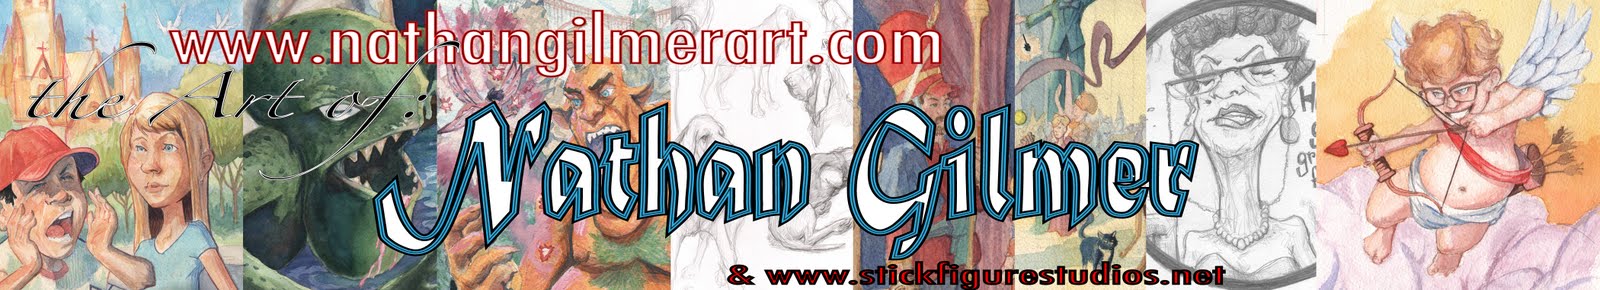 www.nathangilmerart.com the art of Nathan Gilmer